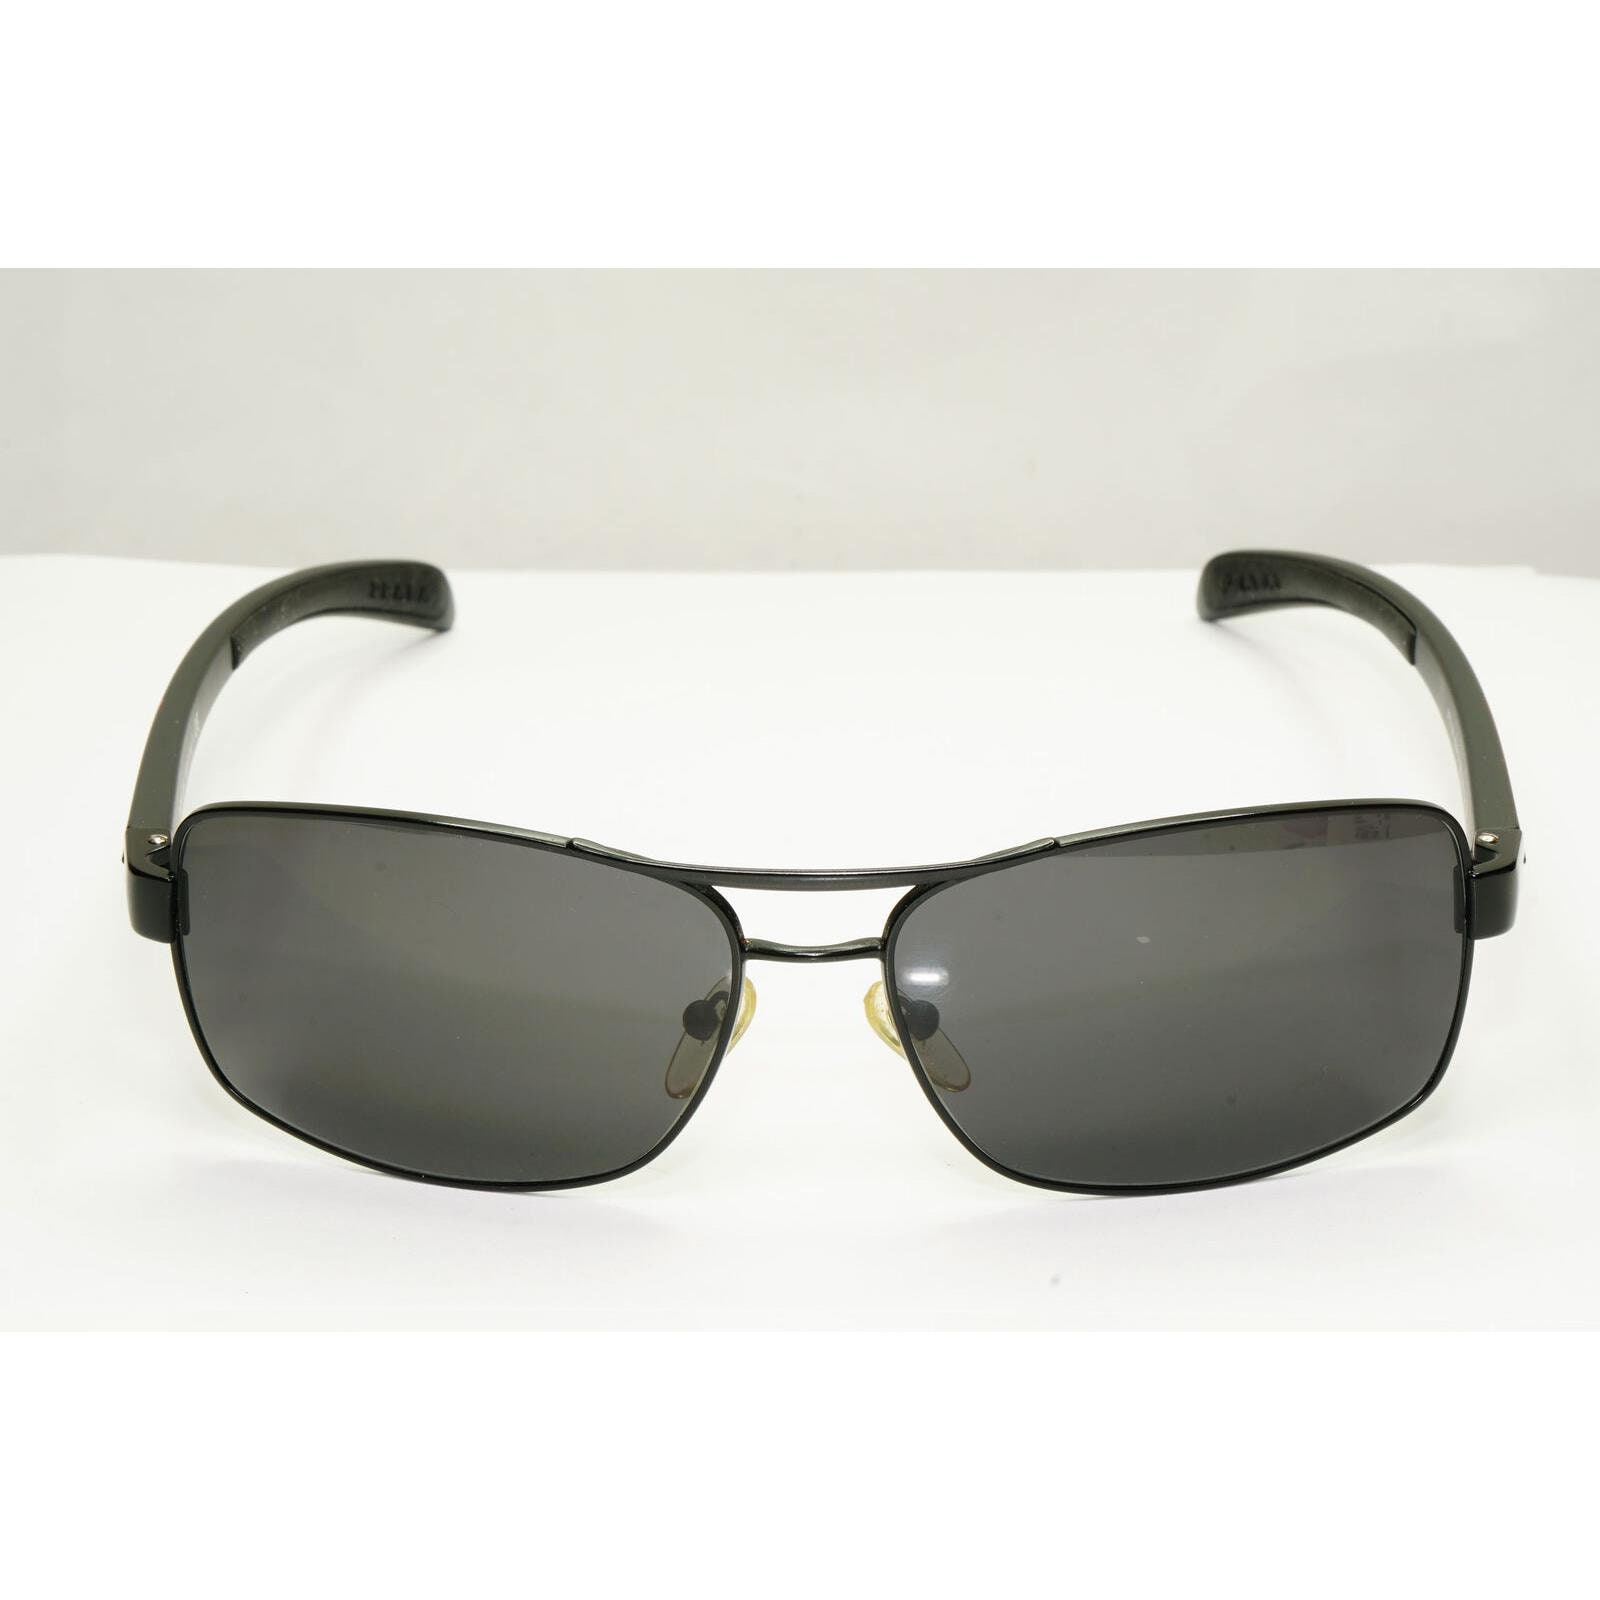 Prada 2010 Black Sunglasses Square Pilot Wrap Ps50ls Sps 50l - Etsy